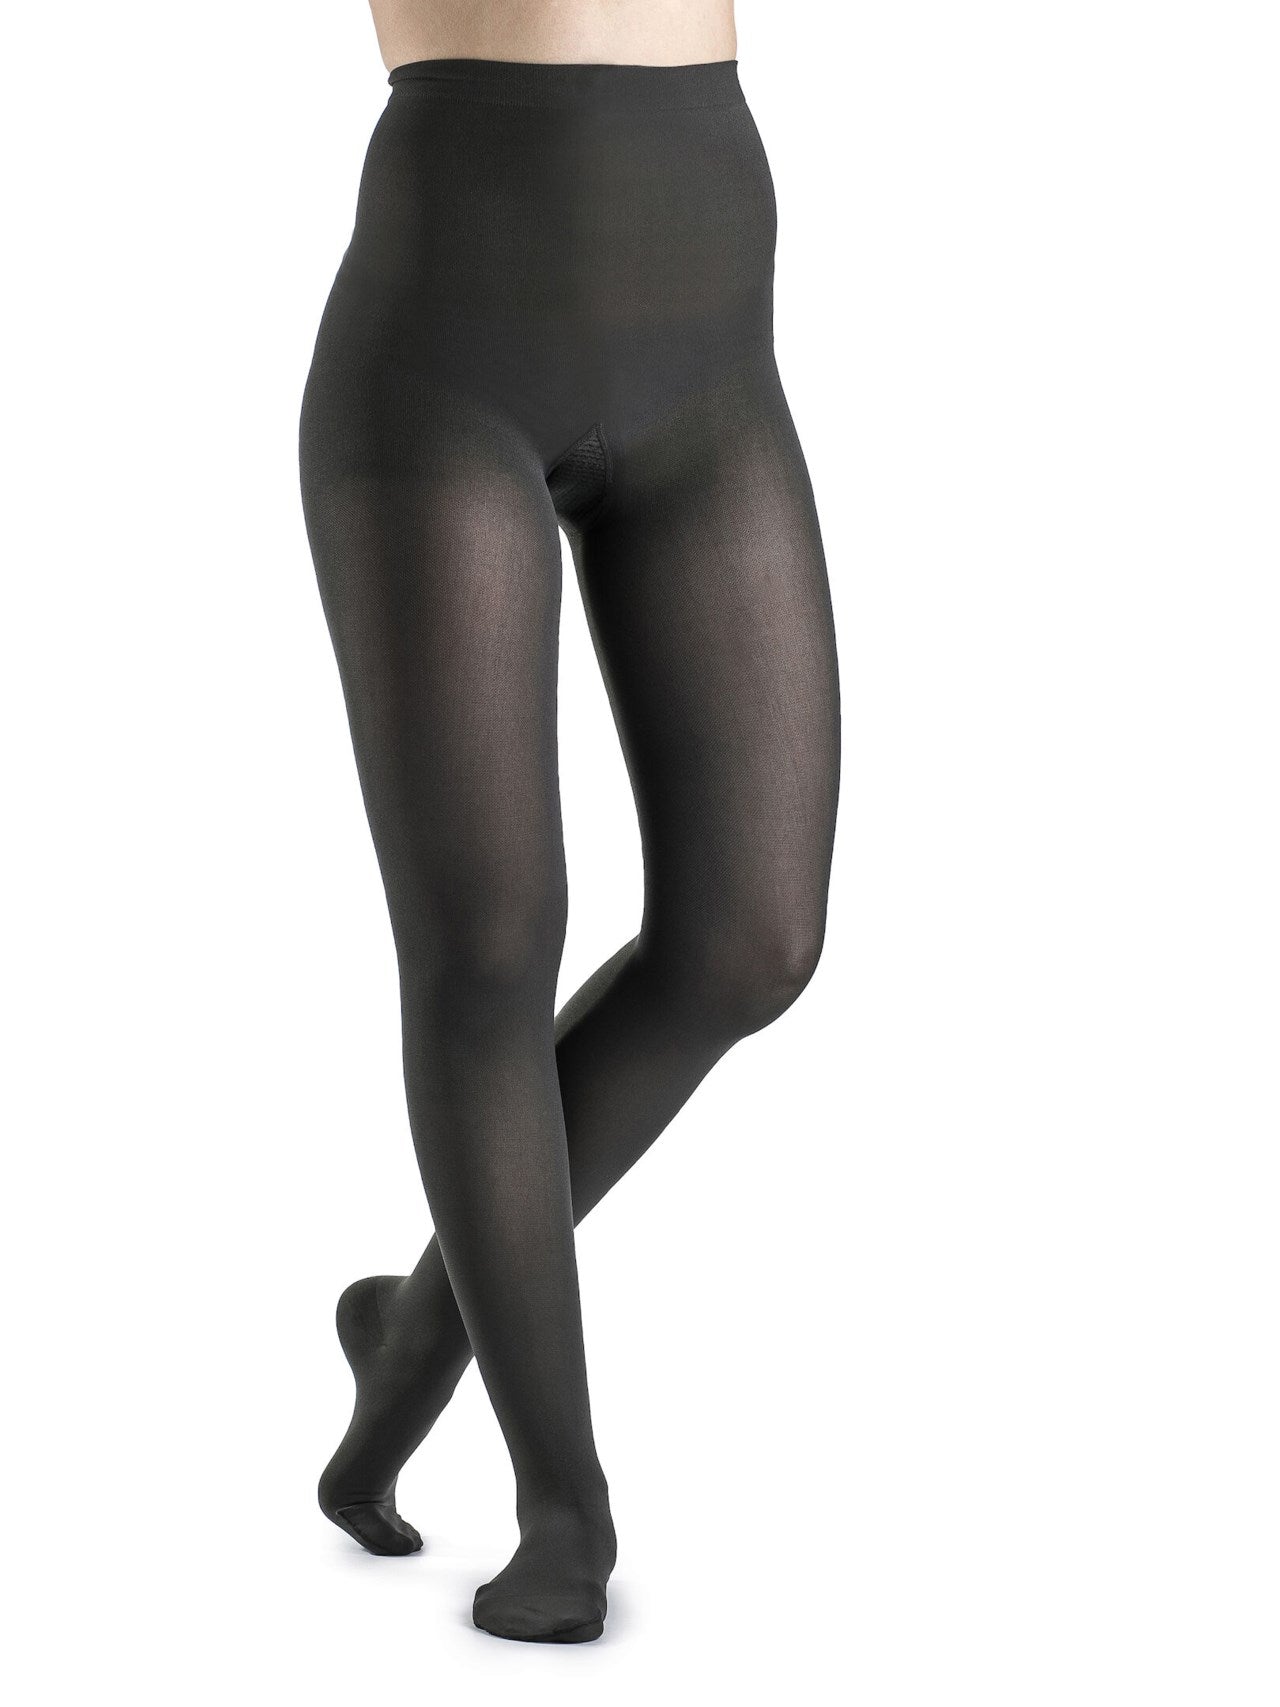 Sigvaris 840 Soft Opaque Compression Socks 15-20 mmHg Thigh High for Female Pantyhose Closed Toe Color Black